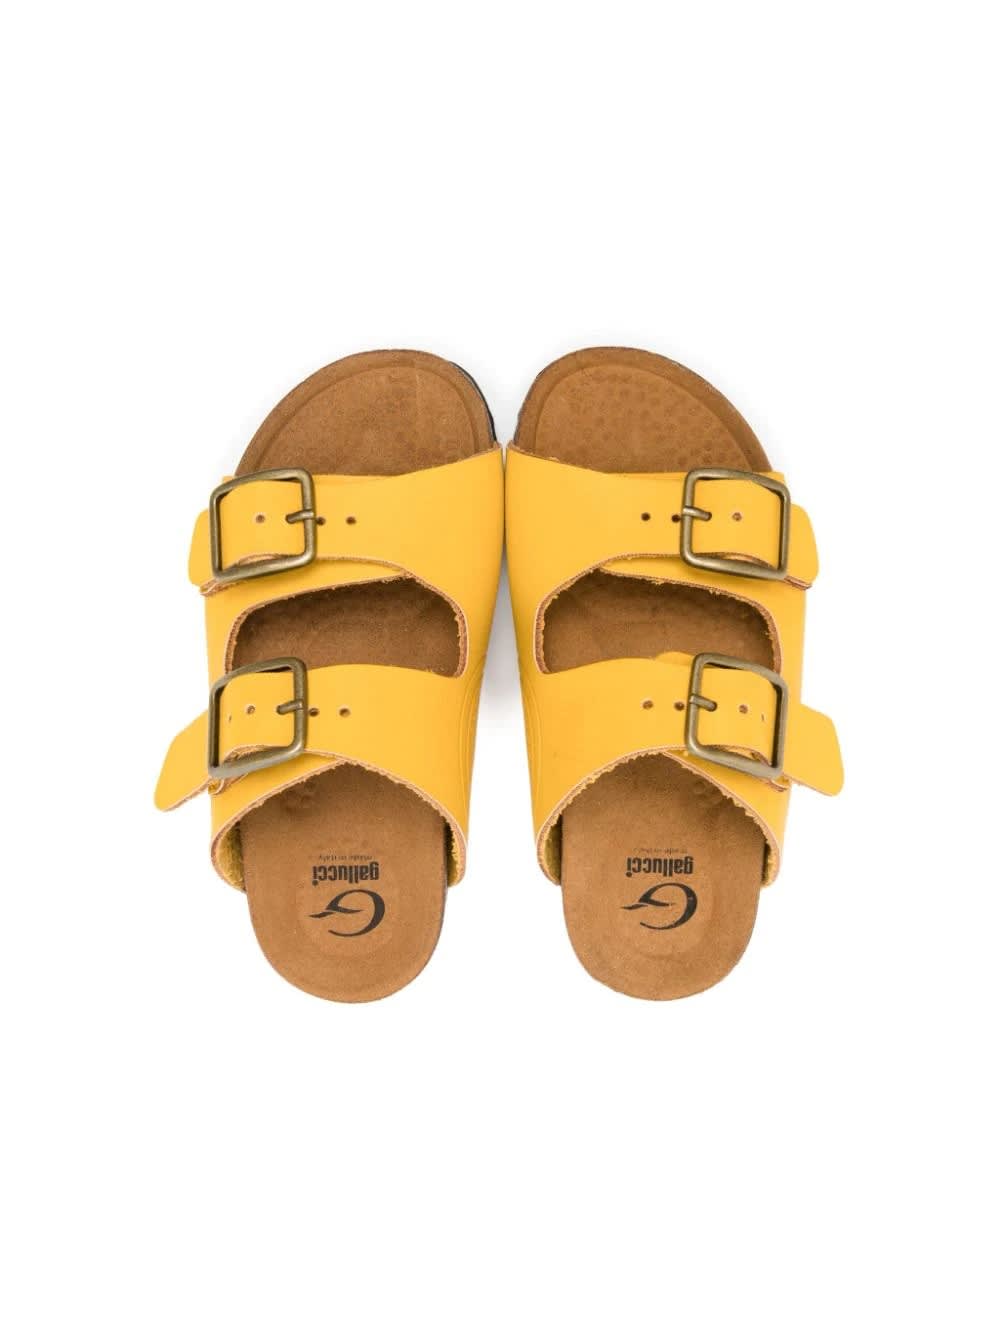 Shop Gallucci Yellow Sandals